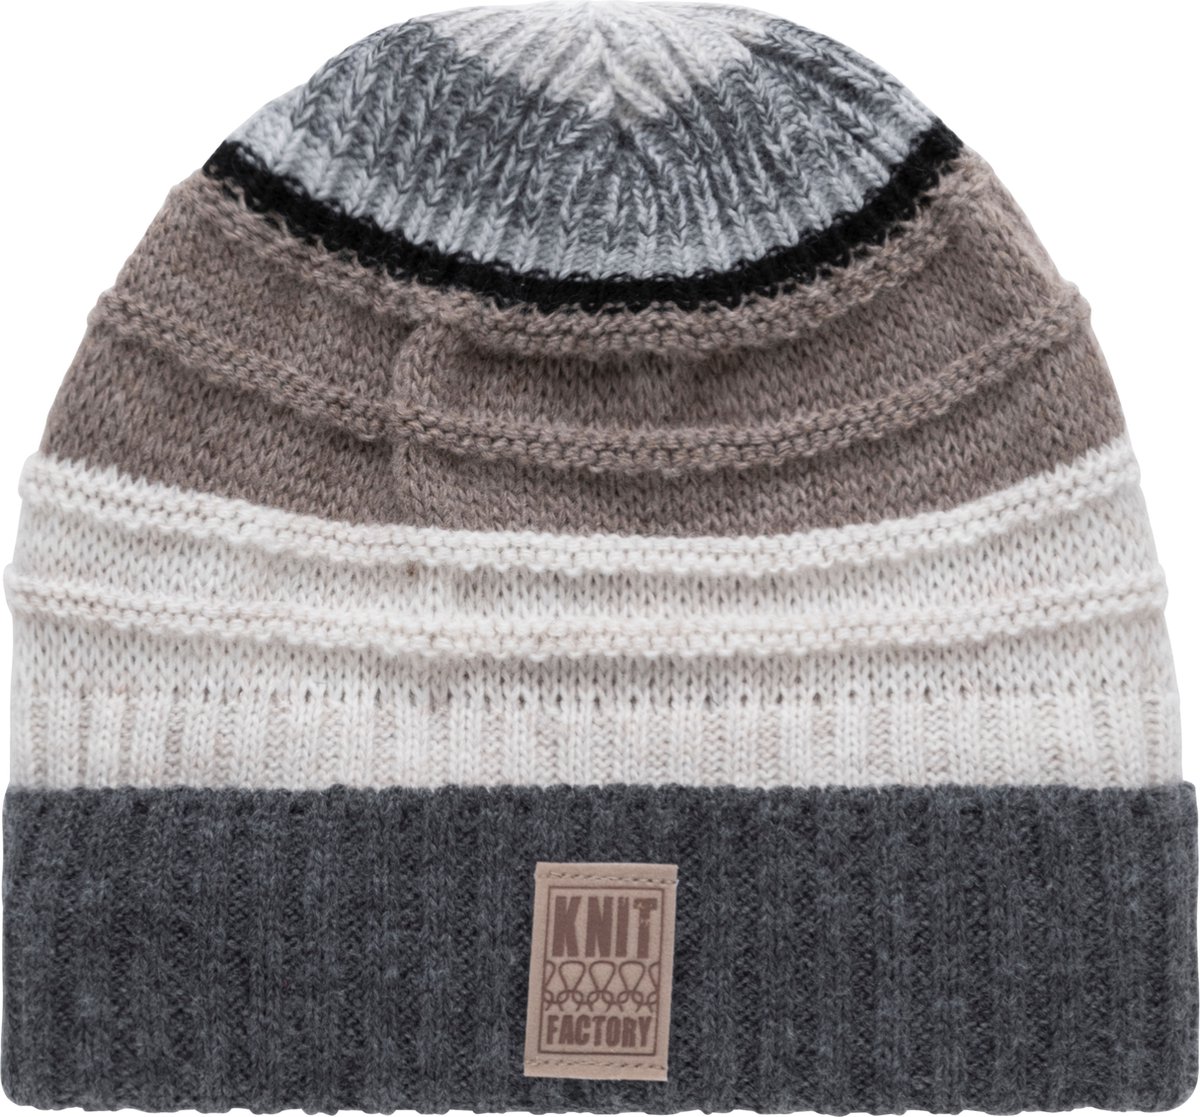 Knit Factory Dali Gebreide Muts Heren & Dames - Beanie hat - Licht Grijs - Grofgebreid - Multicolor - Warme Wintermuts met grijstinten - Unisex - One Size